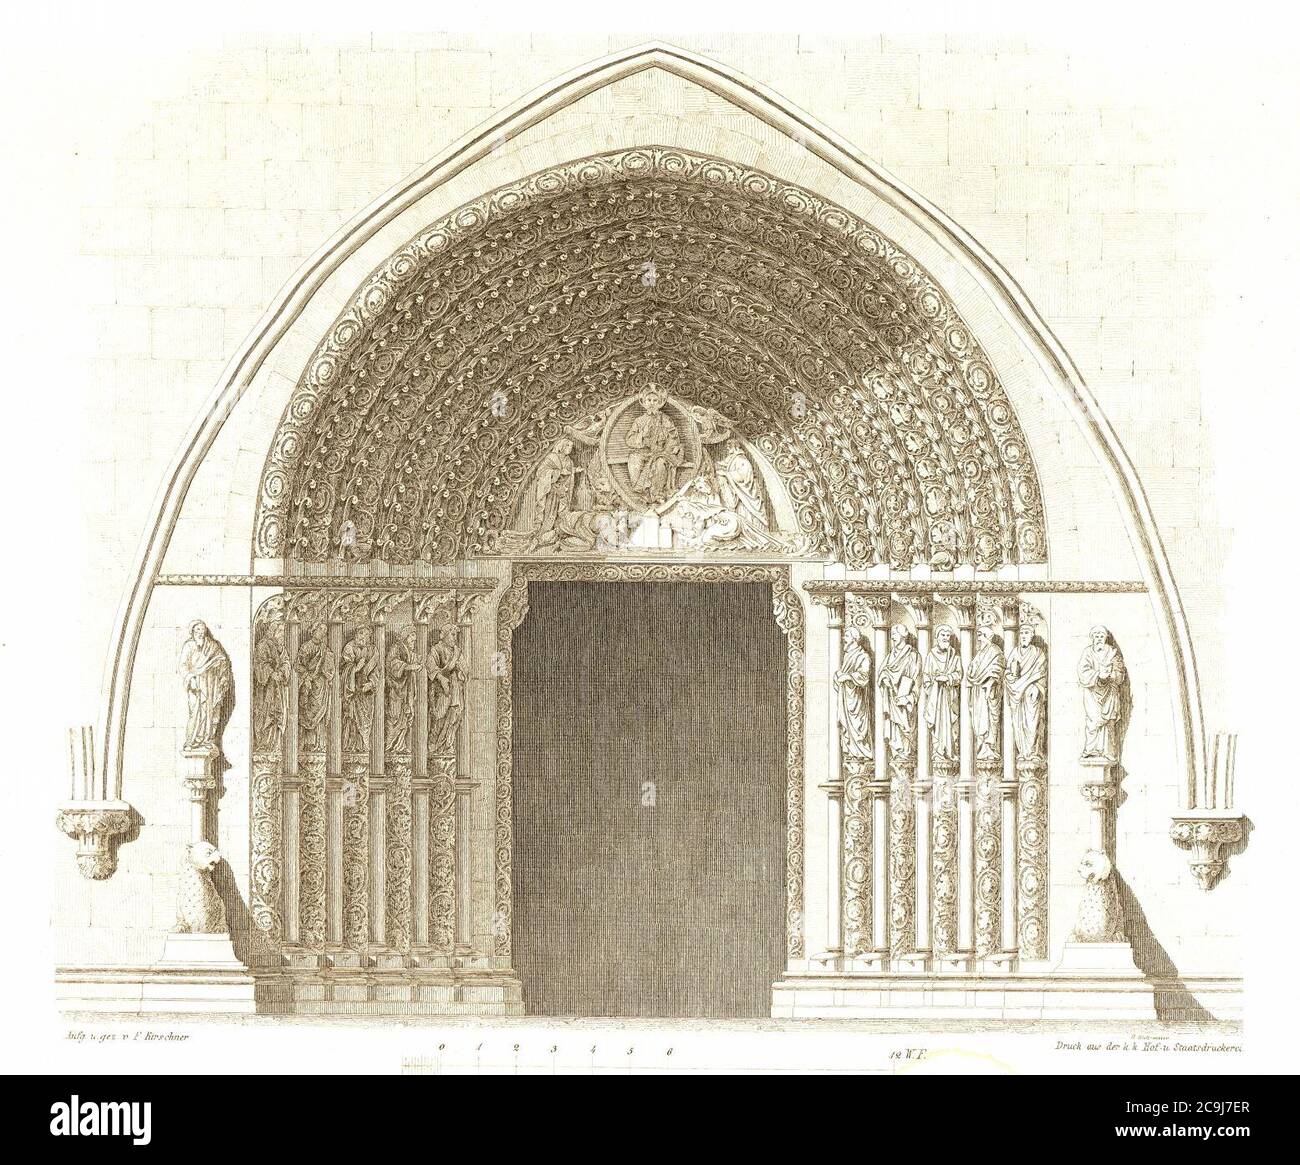 Jahrbuch MZK Band 03 - Kirche Porta Coelis - Tafel 4 Portal der Westseite  Stock Photo - Alamy